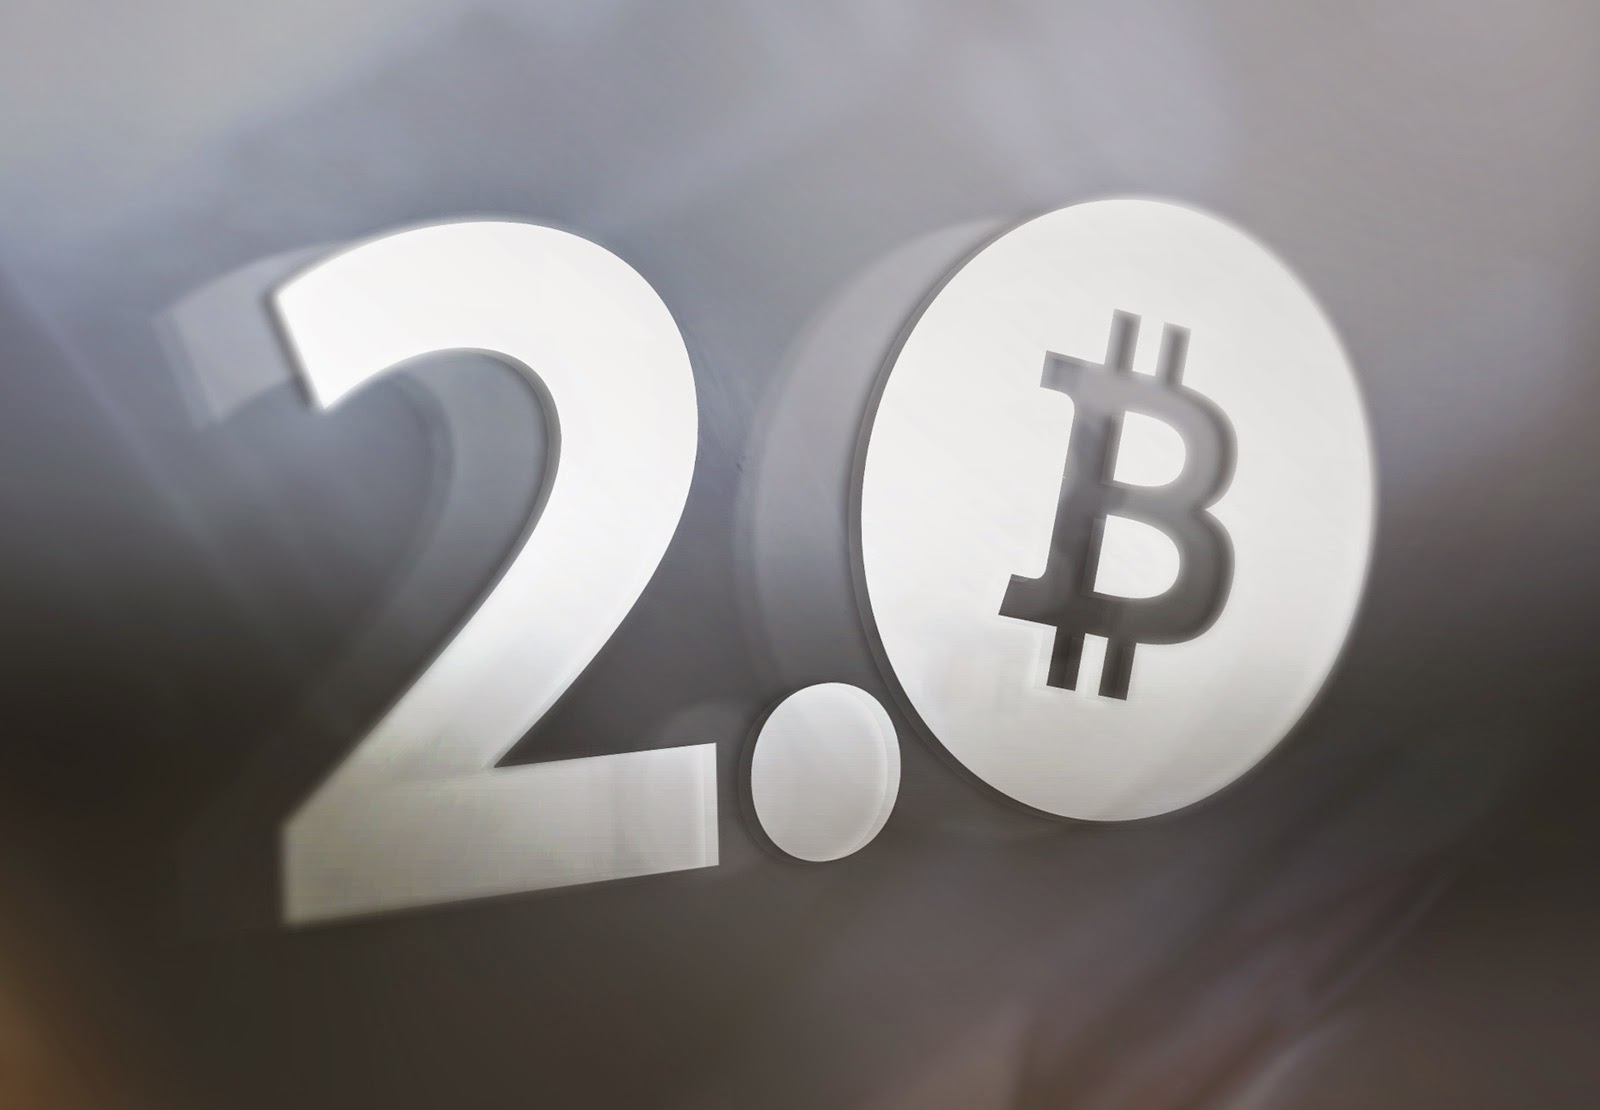 20 to bitcoin